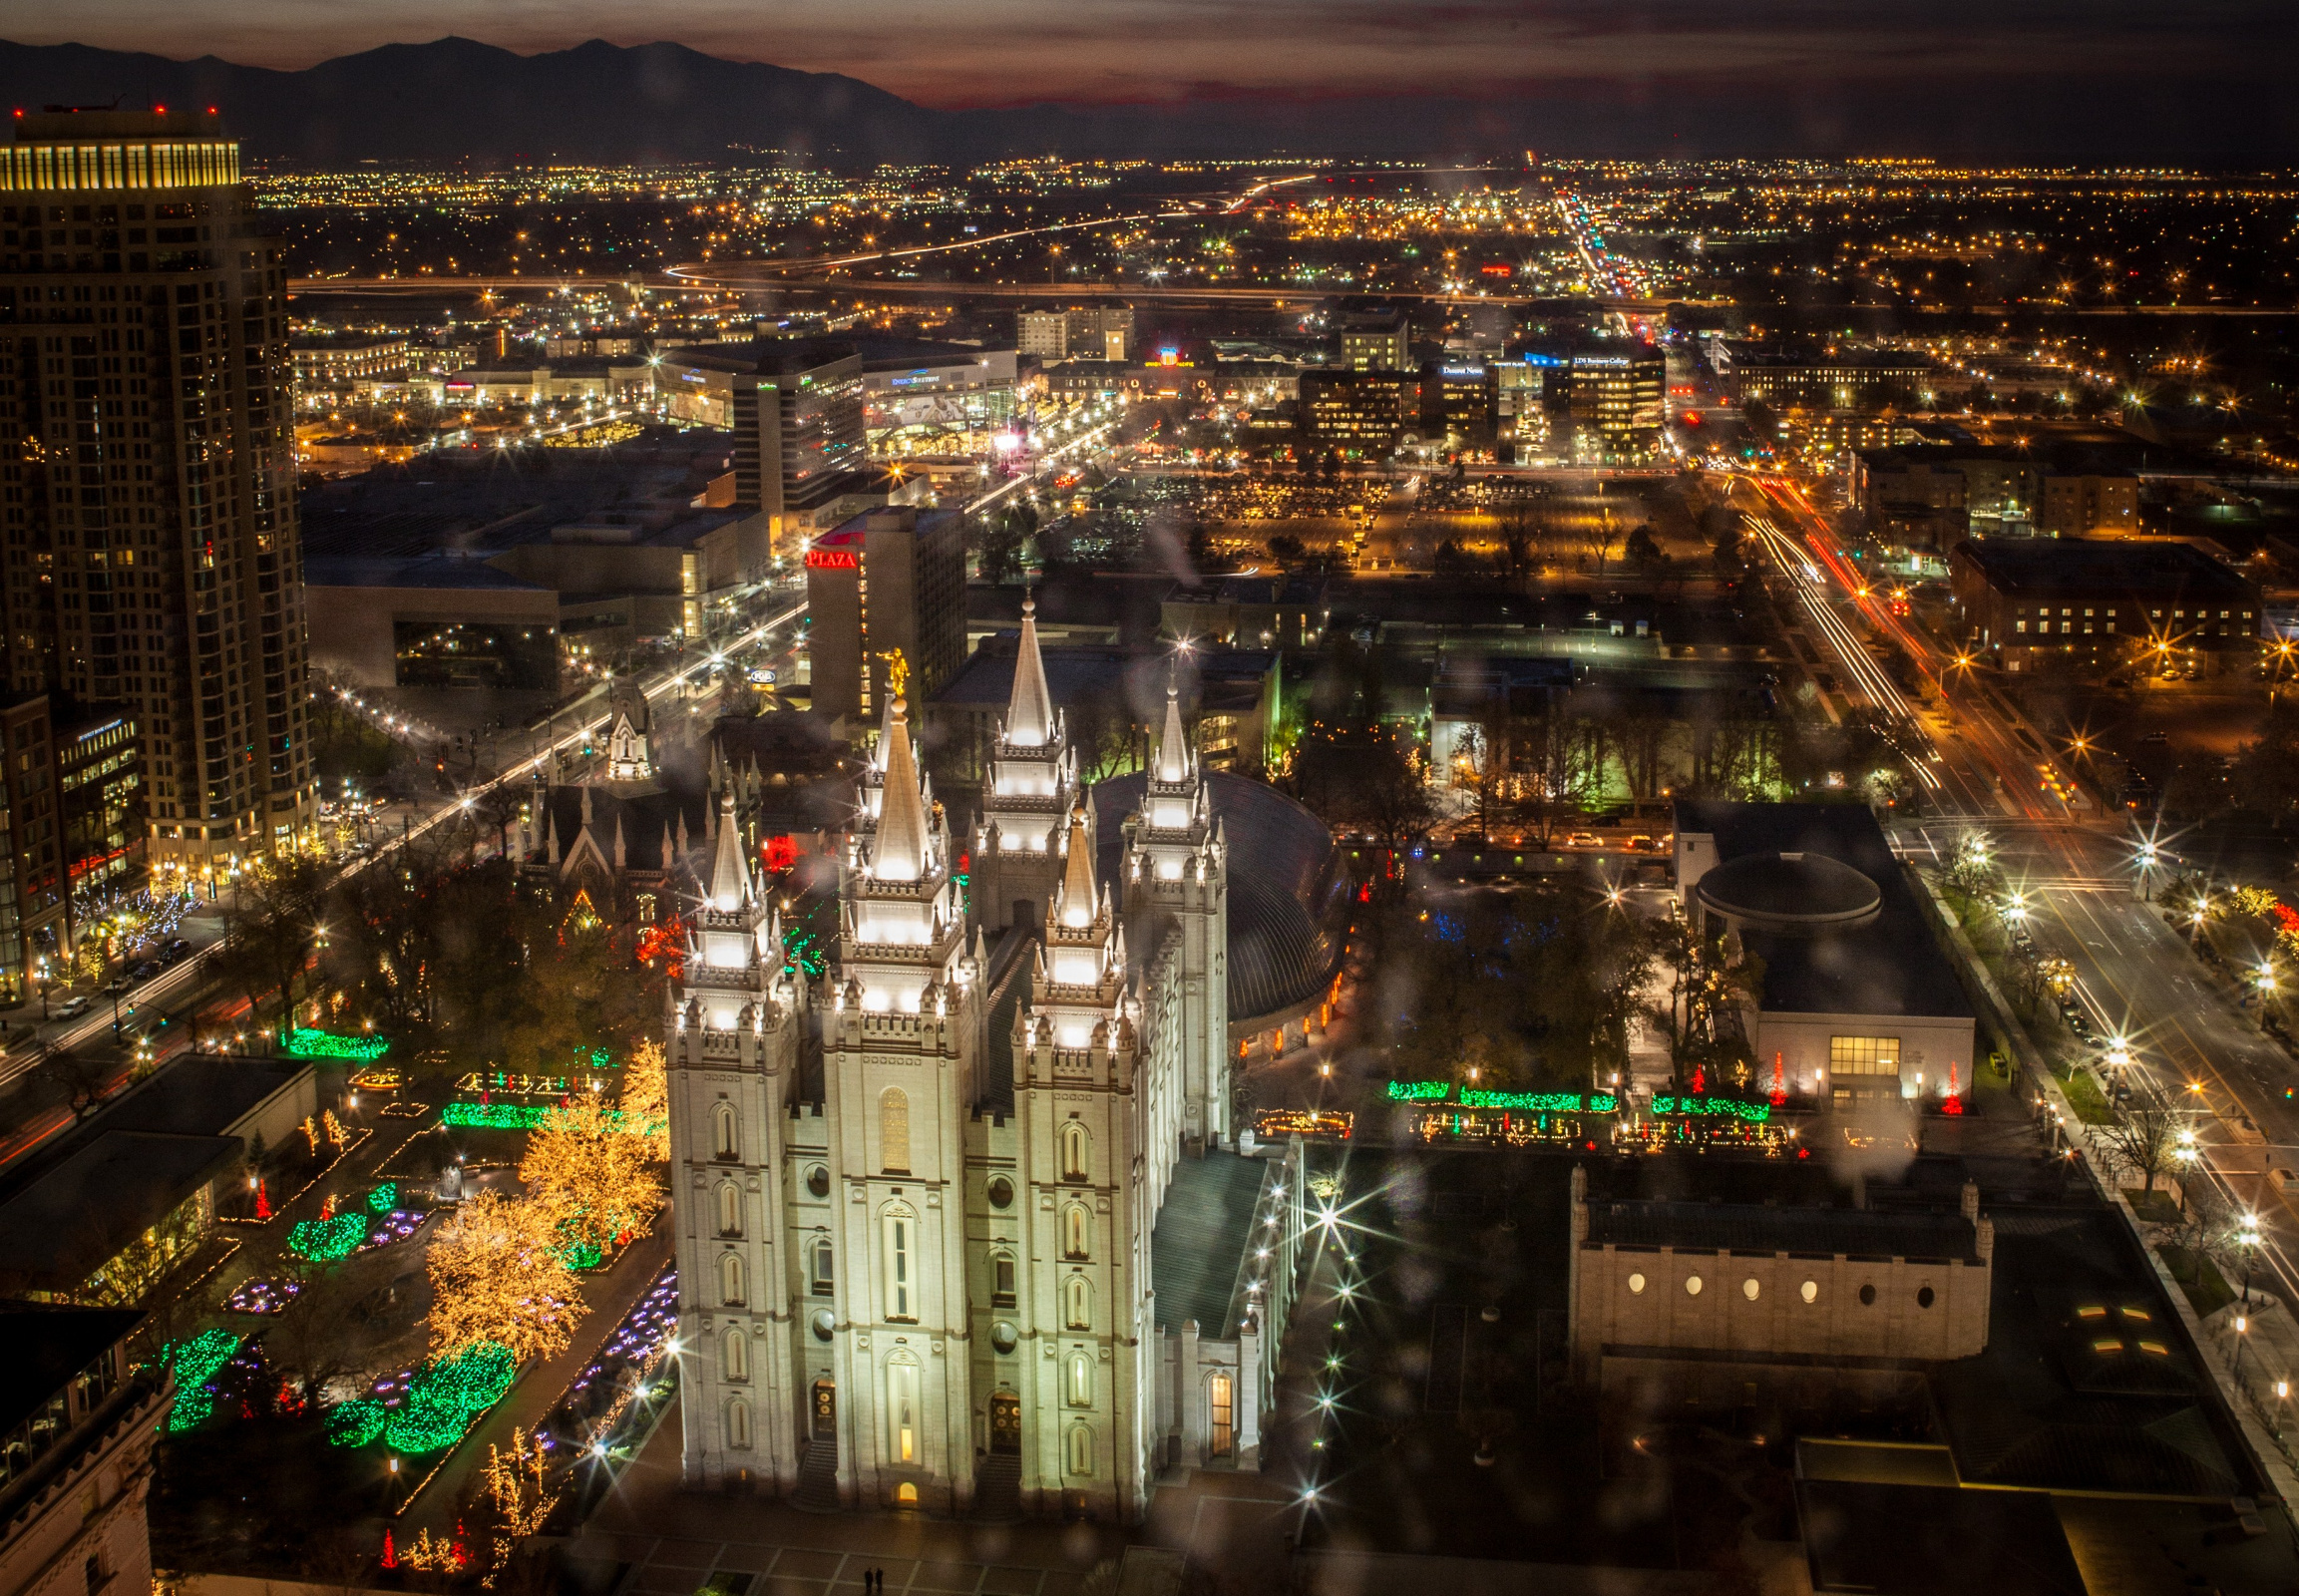 Salt Lake City, Christmas festivities, Magical atmosphere, Festive decorations, 2310x1600 HD Desktop